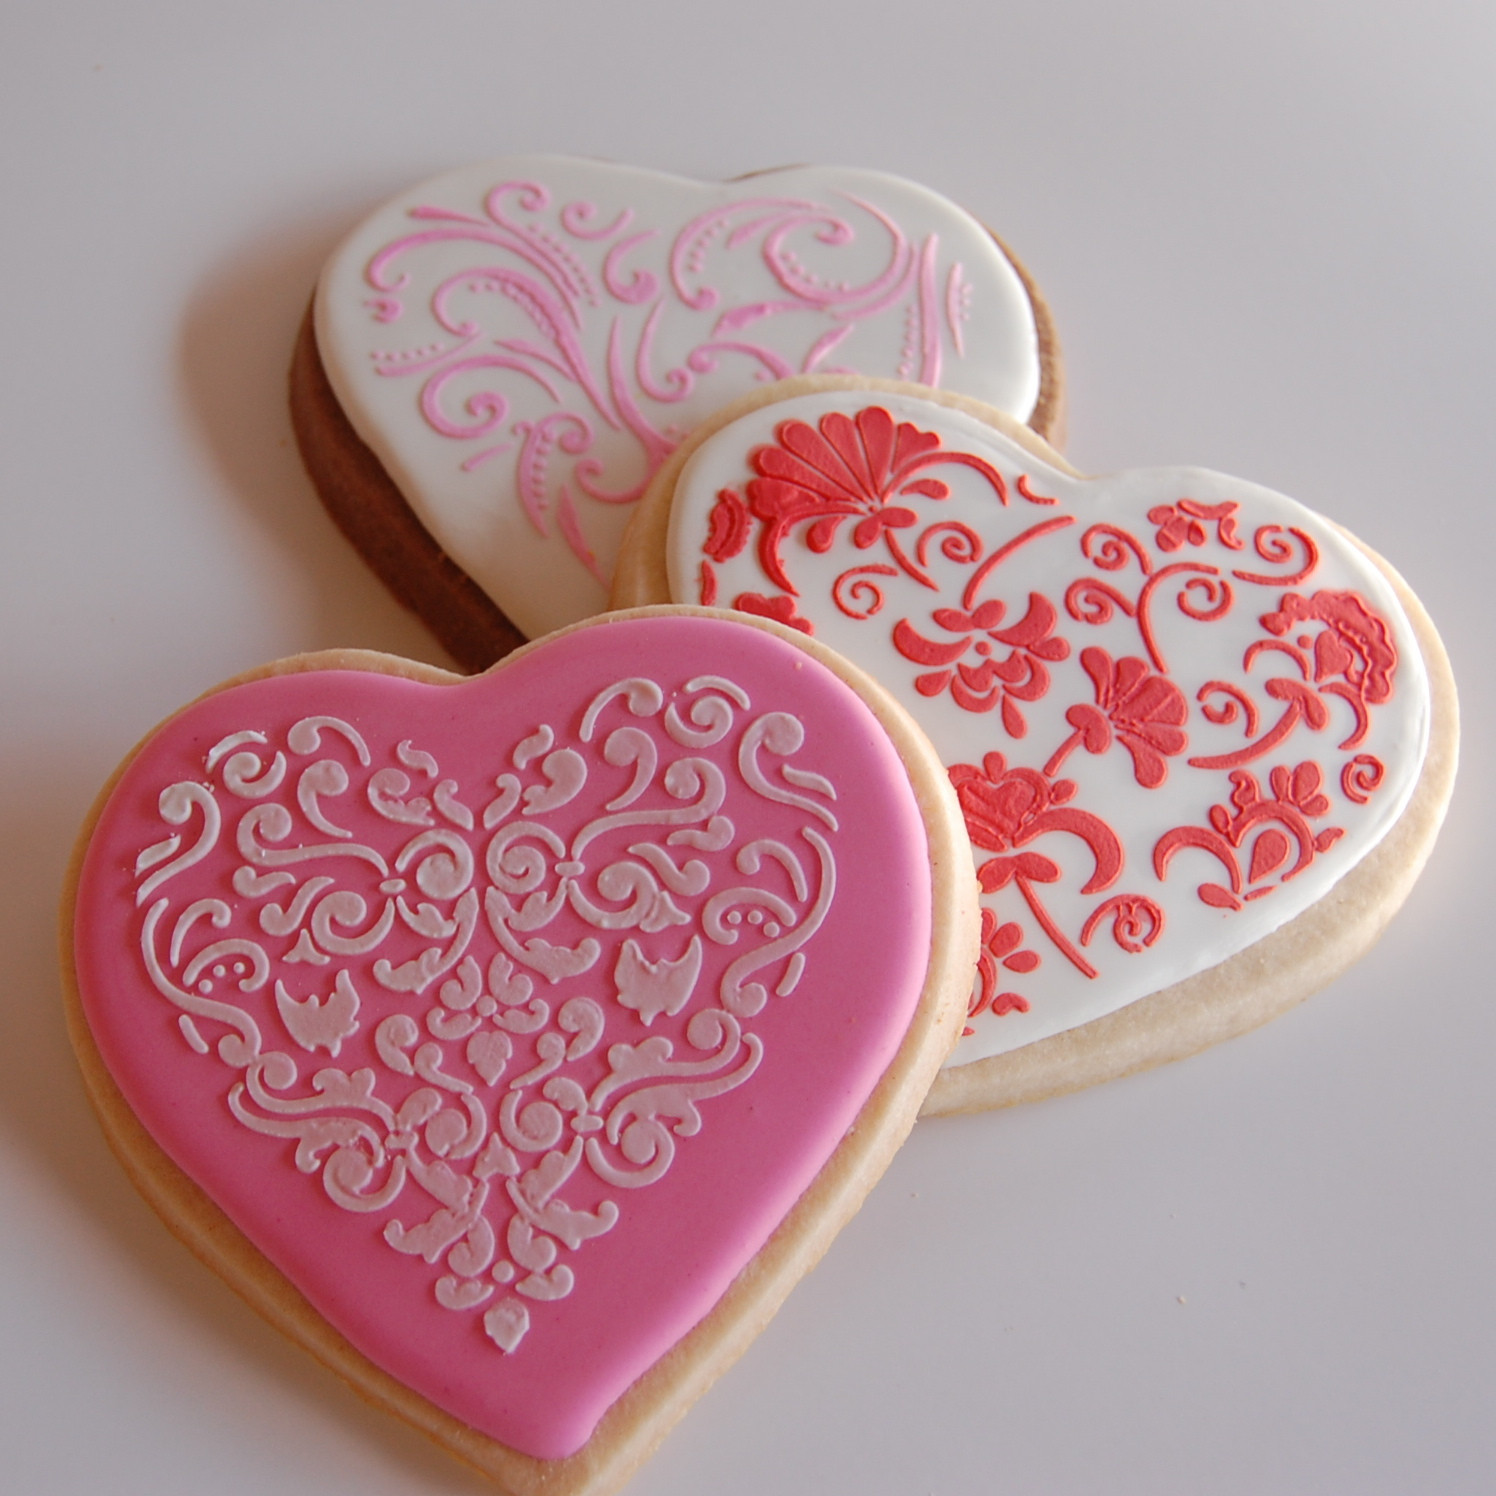 Valentines Day Sugar Cookies
 Pillsbury Sugar Cookies Valentines Day Pillsbury pany